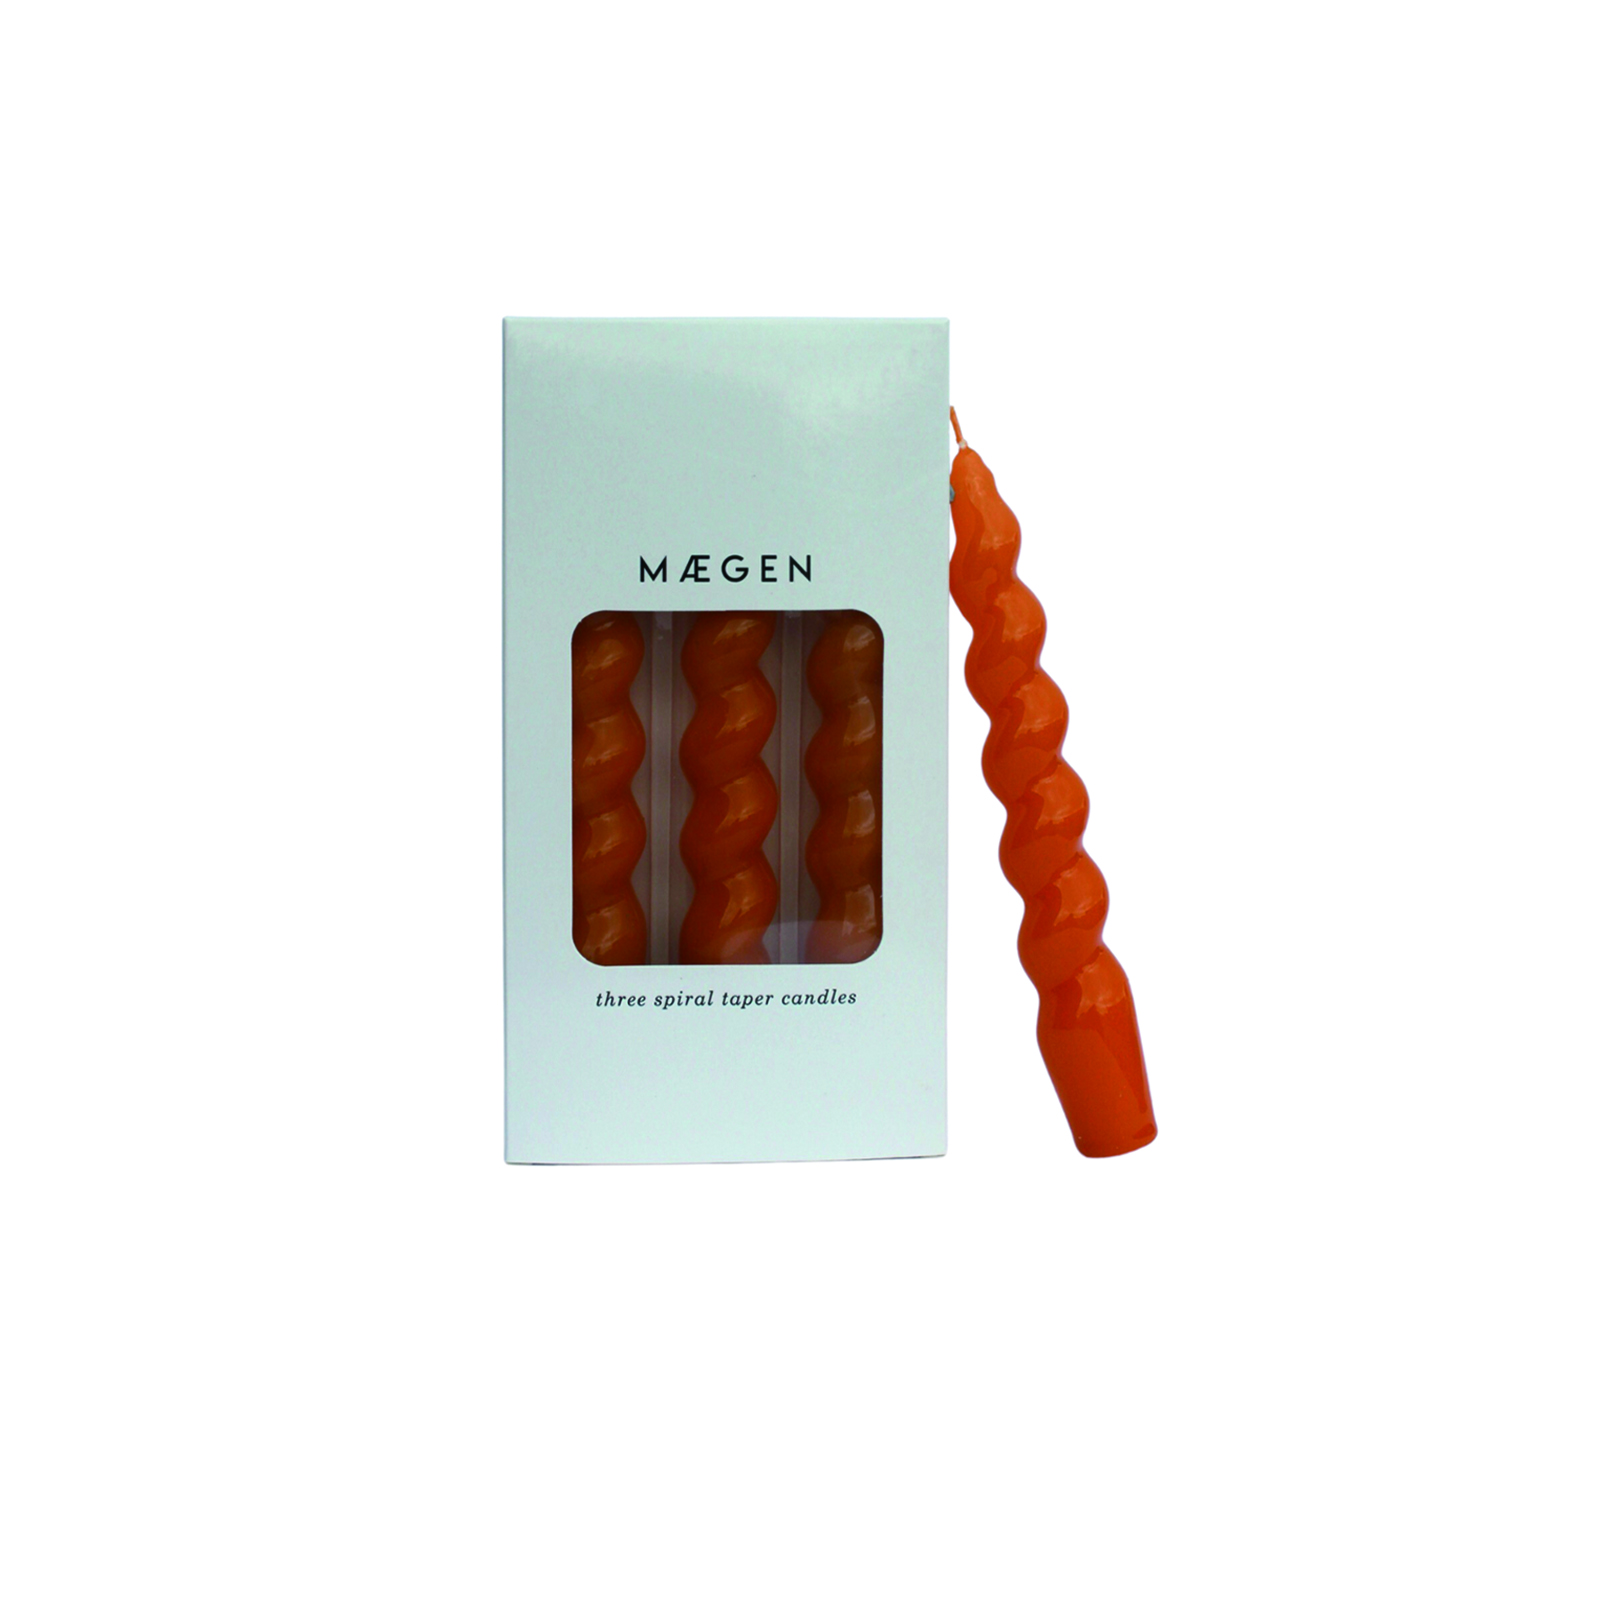 Maegen 18cm Spiral Taper Candles - Tangerine 3 pack